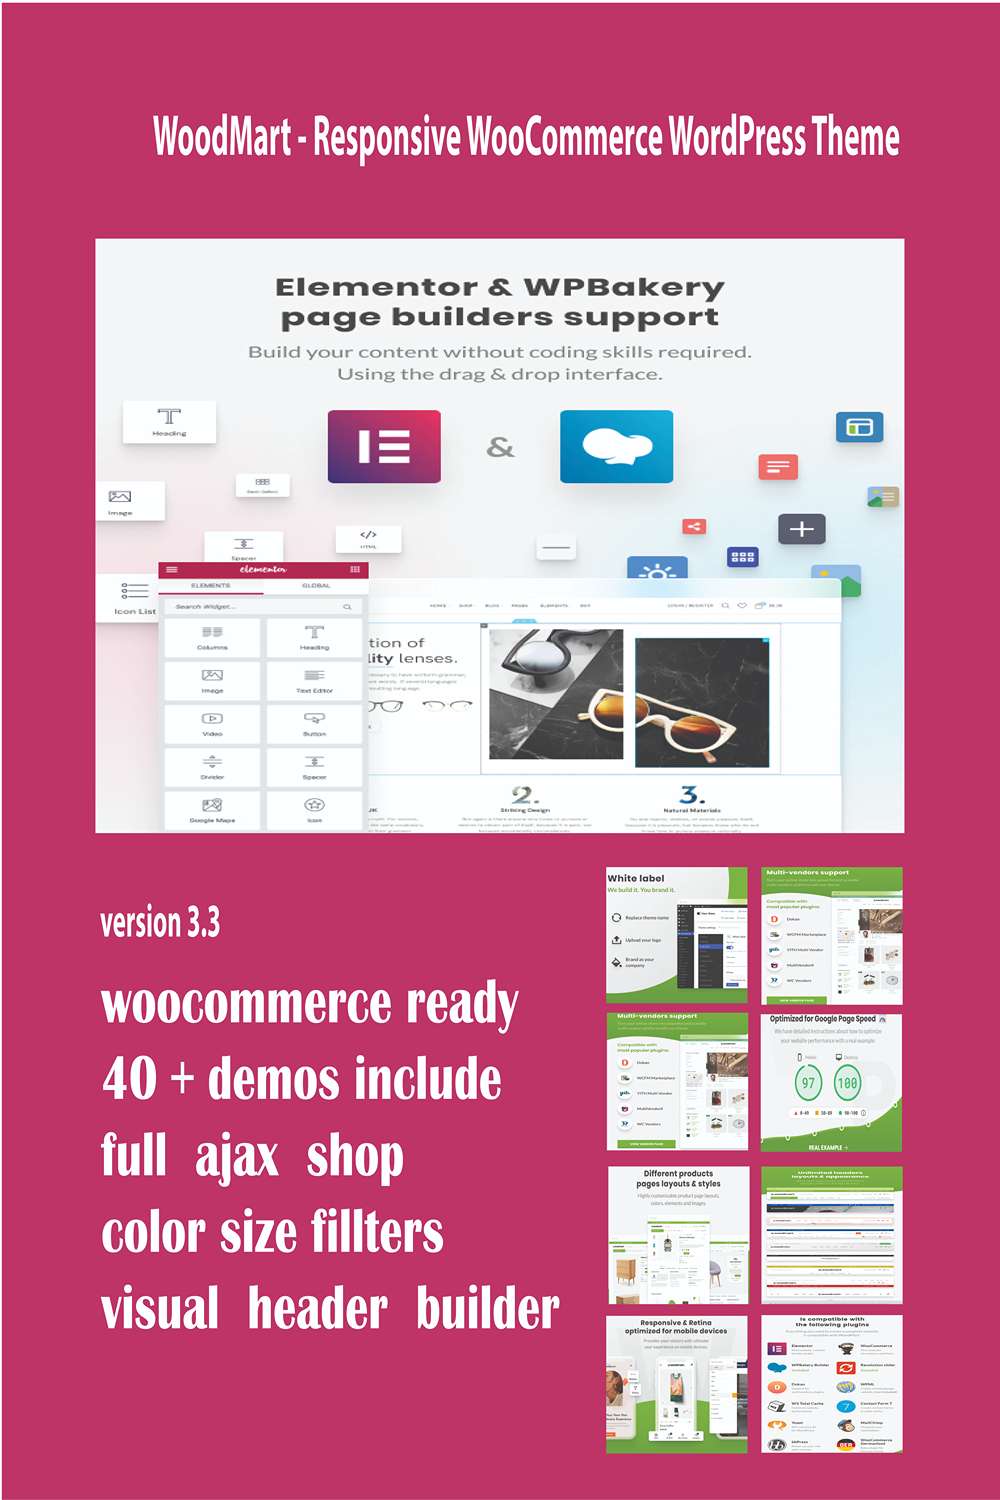 Wood Mart - Responsive Woo Commerce WordPress Theme pinterest preview image.